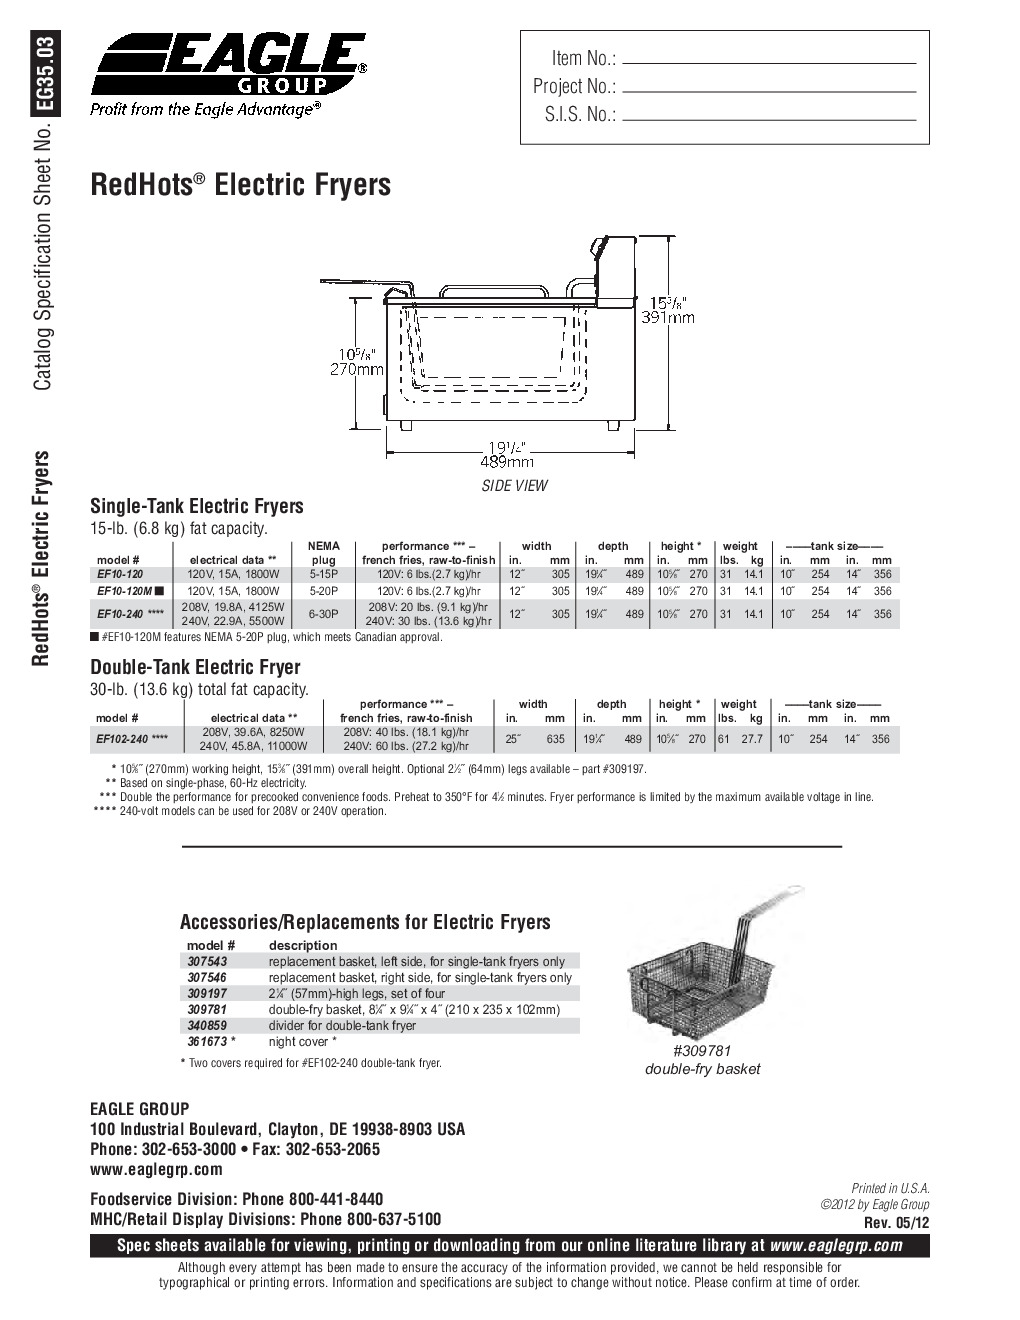 Eagle Group EF10-240 Full Pot Countertop Electric Fryer w/ 15-lb Capacity, 2 Baskets, 208-204v/1ph